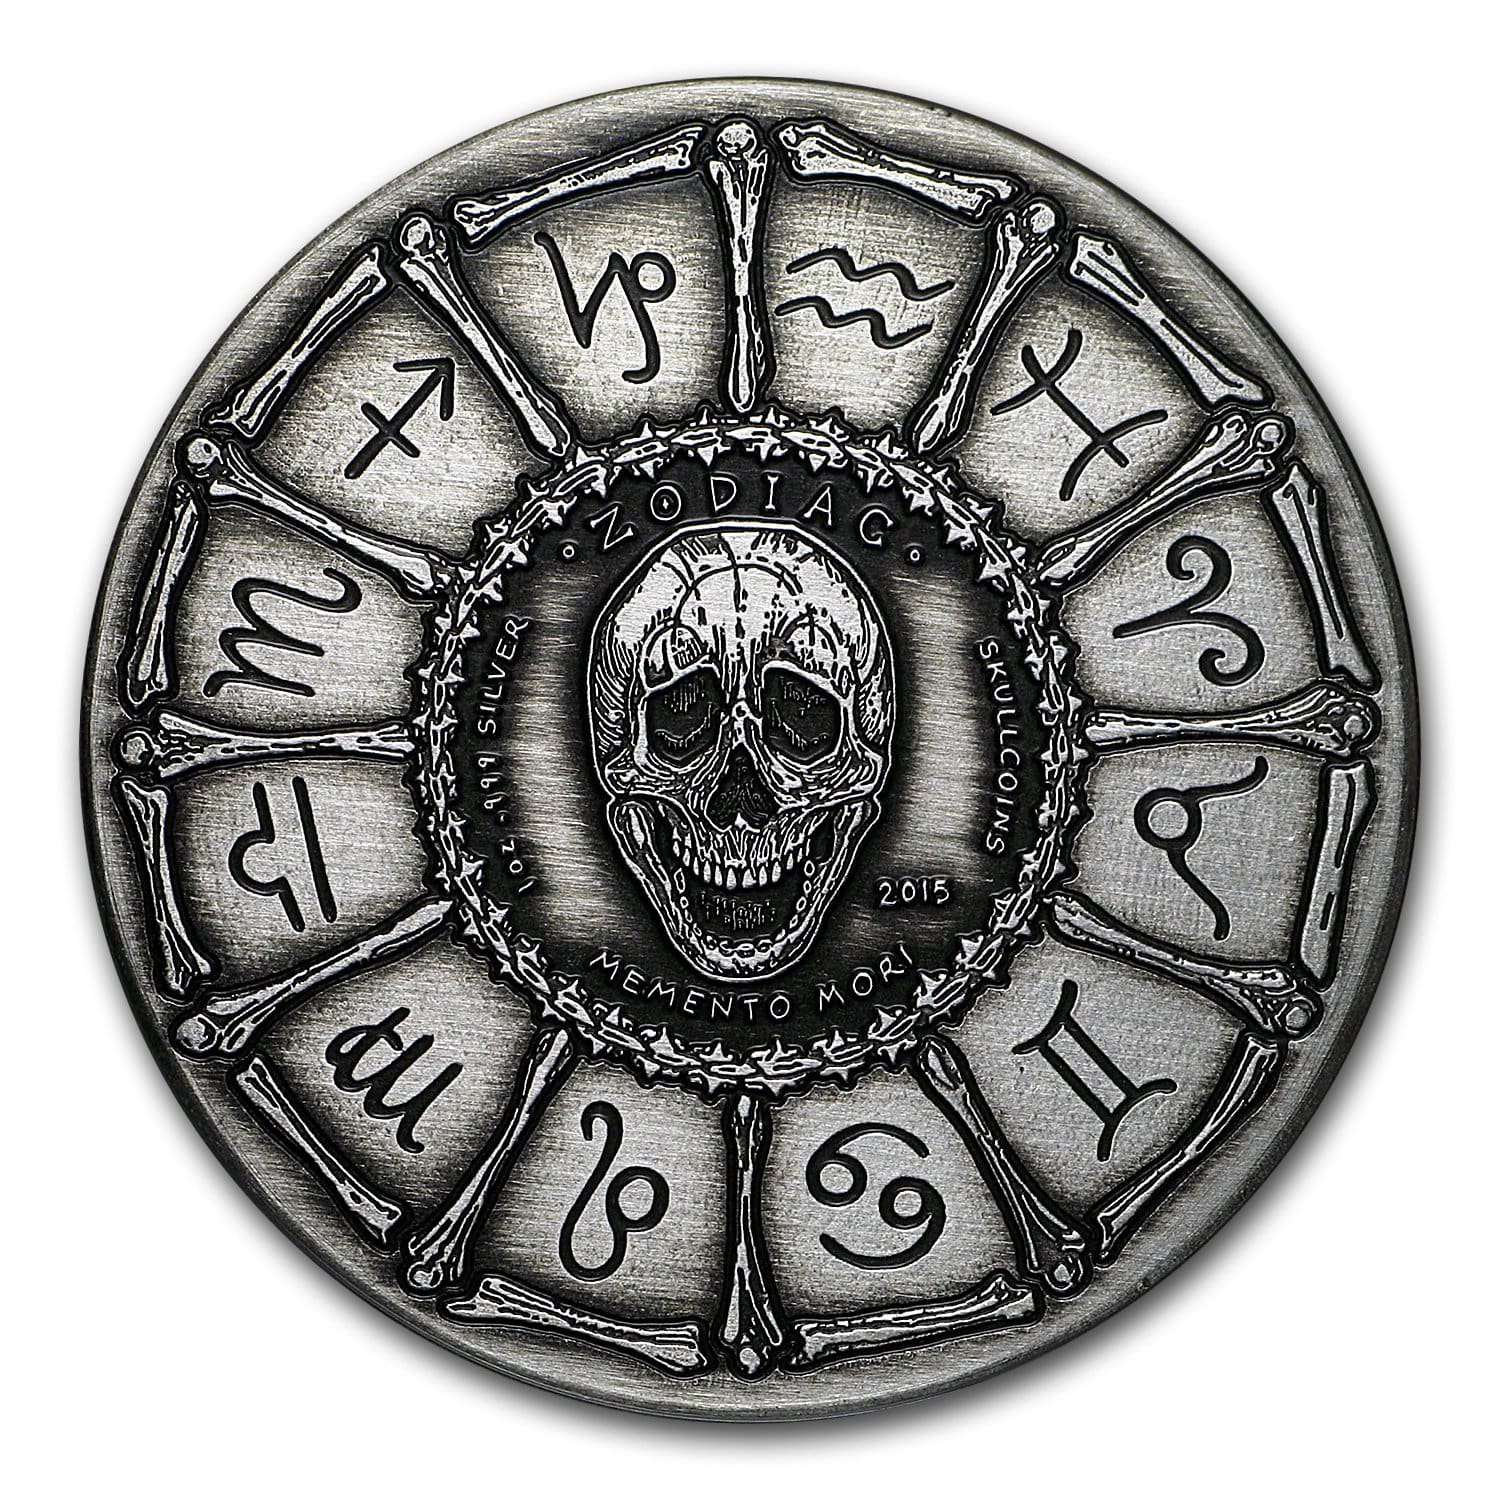 2015 Libra - Zodiac Skull Series 1oz Silver Antiqued Coin Obverse View